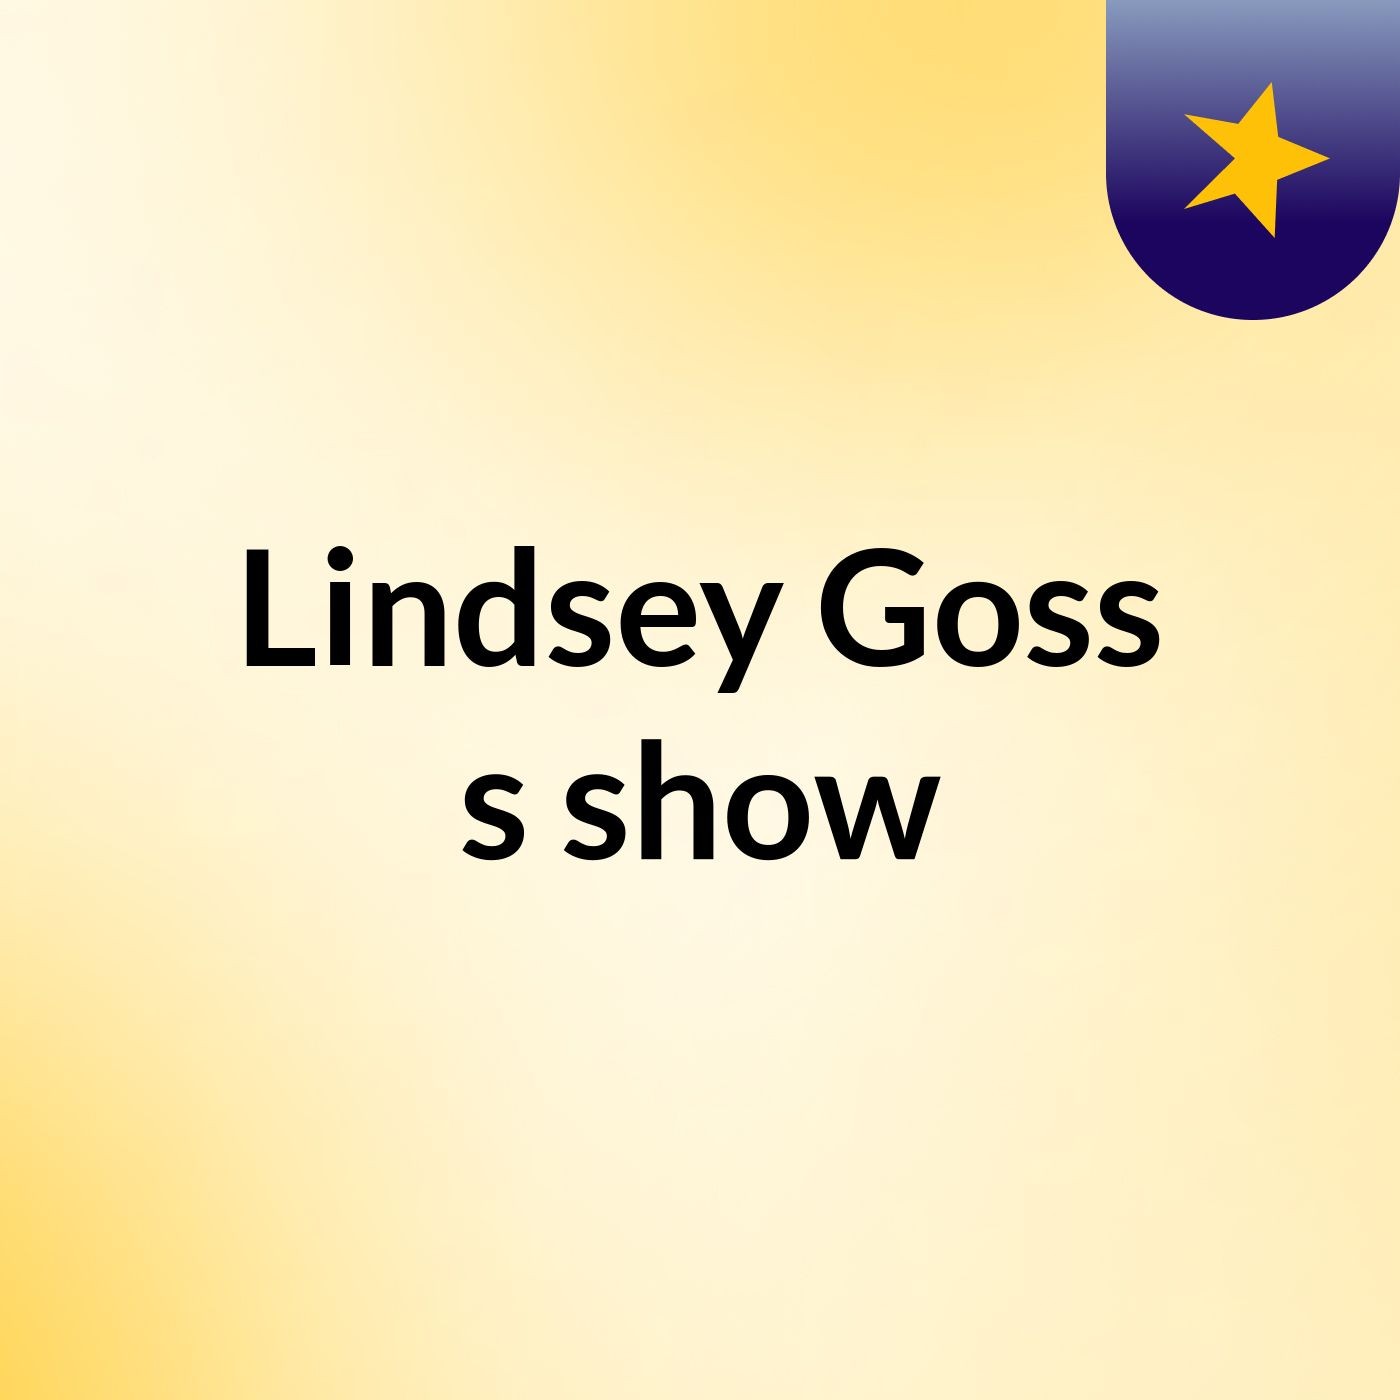 Lindsey Goss's show